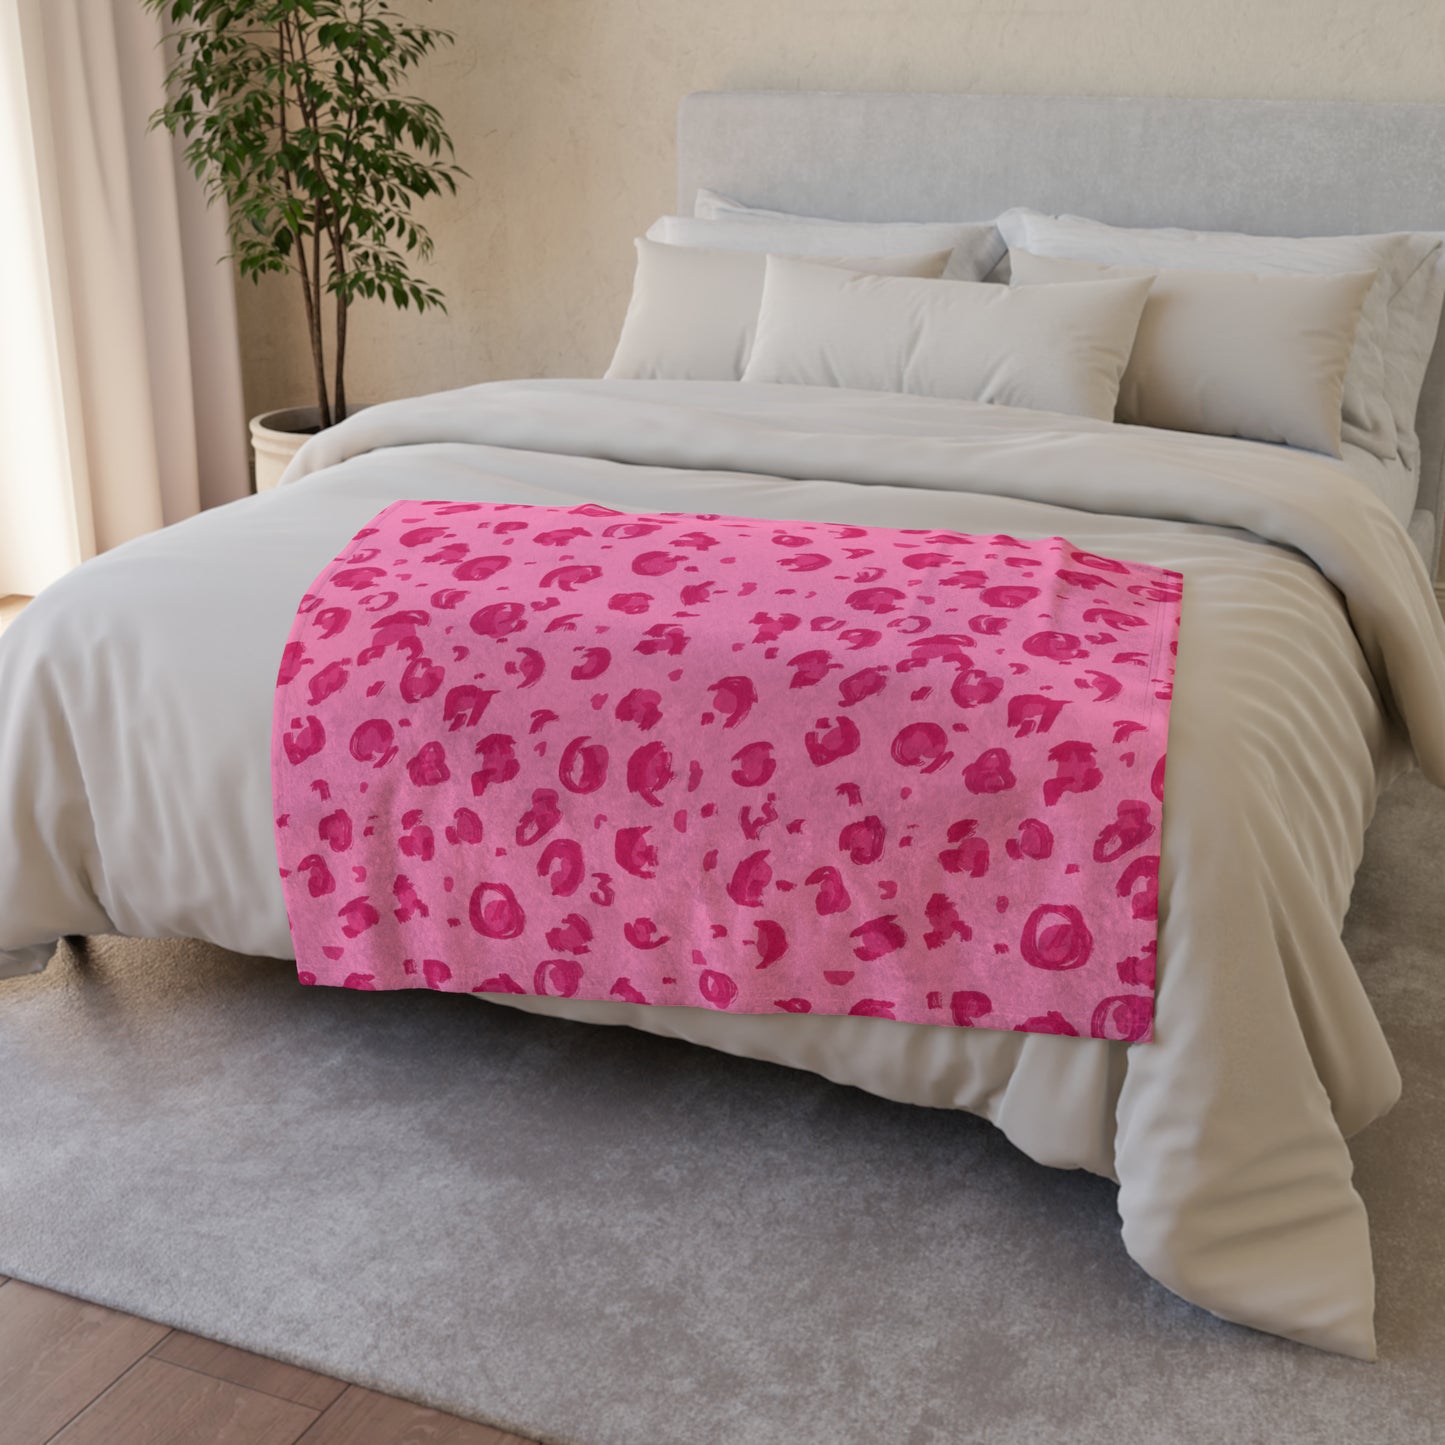 Pink Leopard Print Blanket